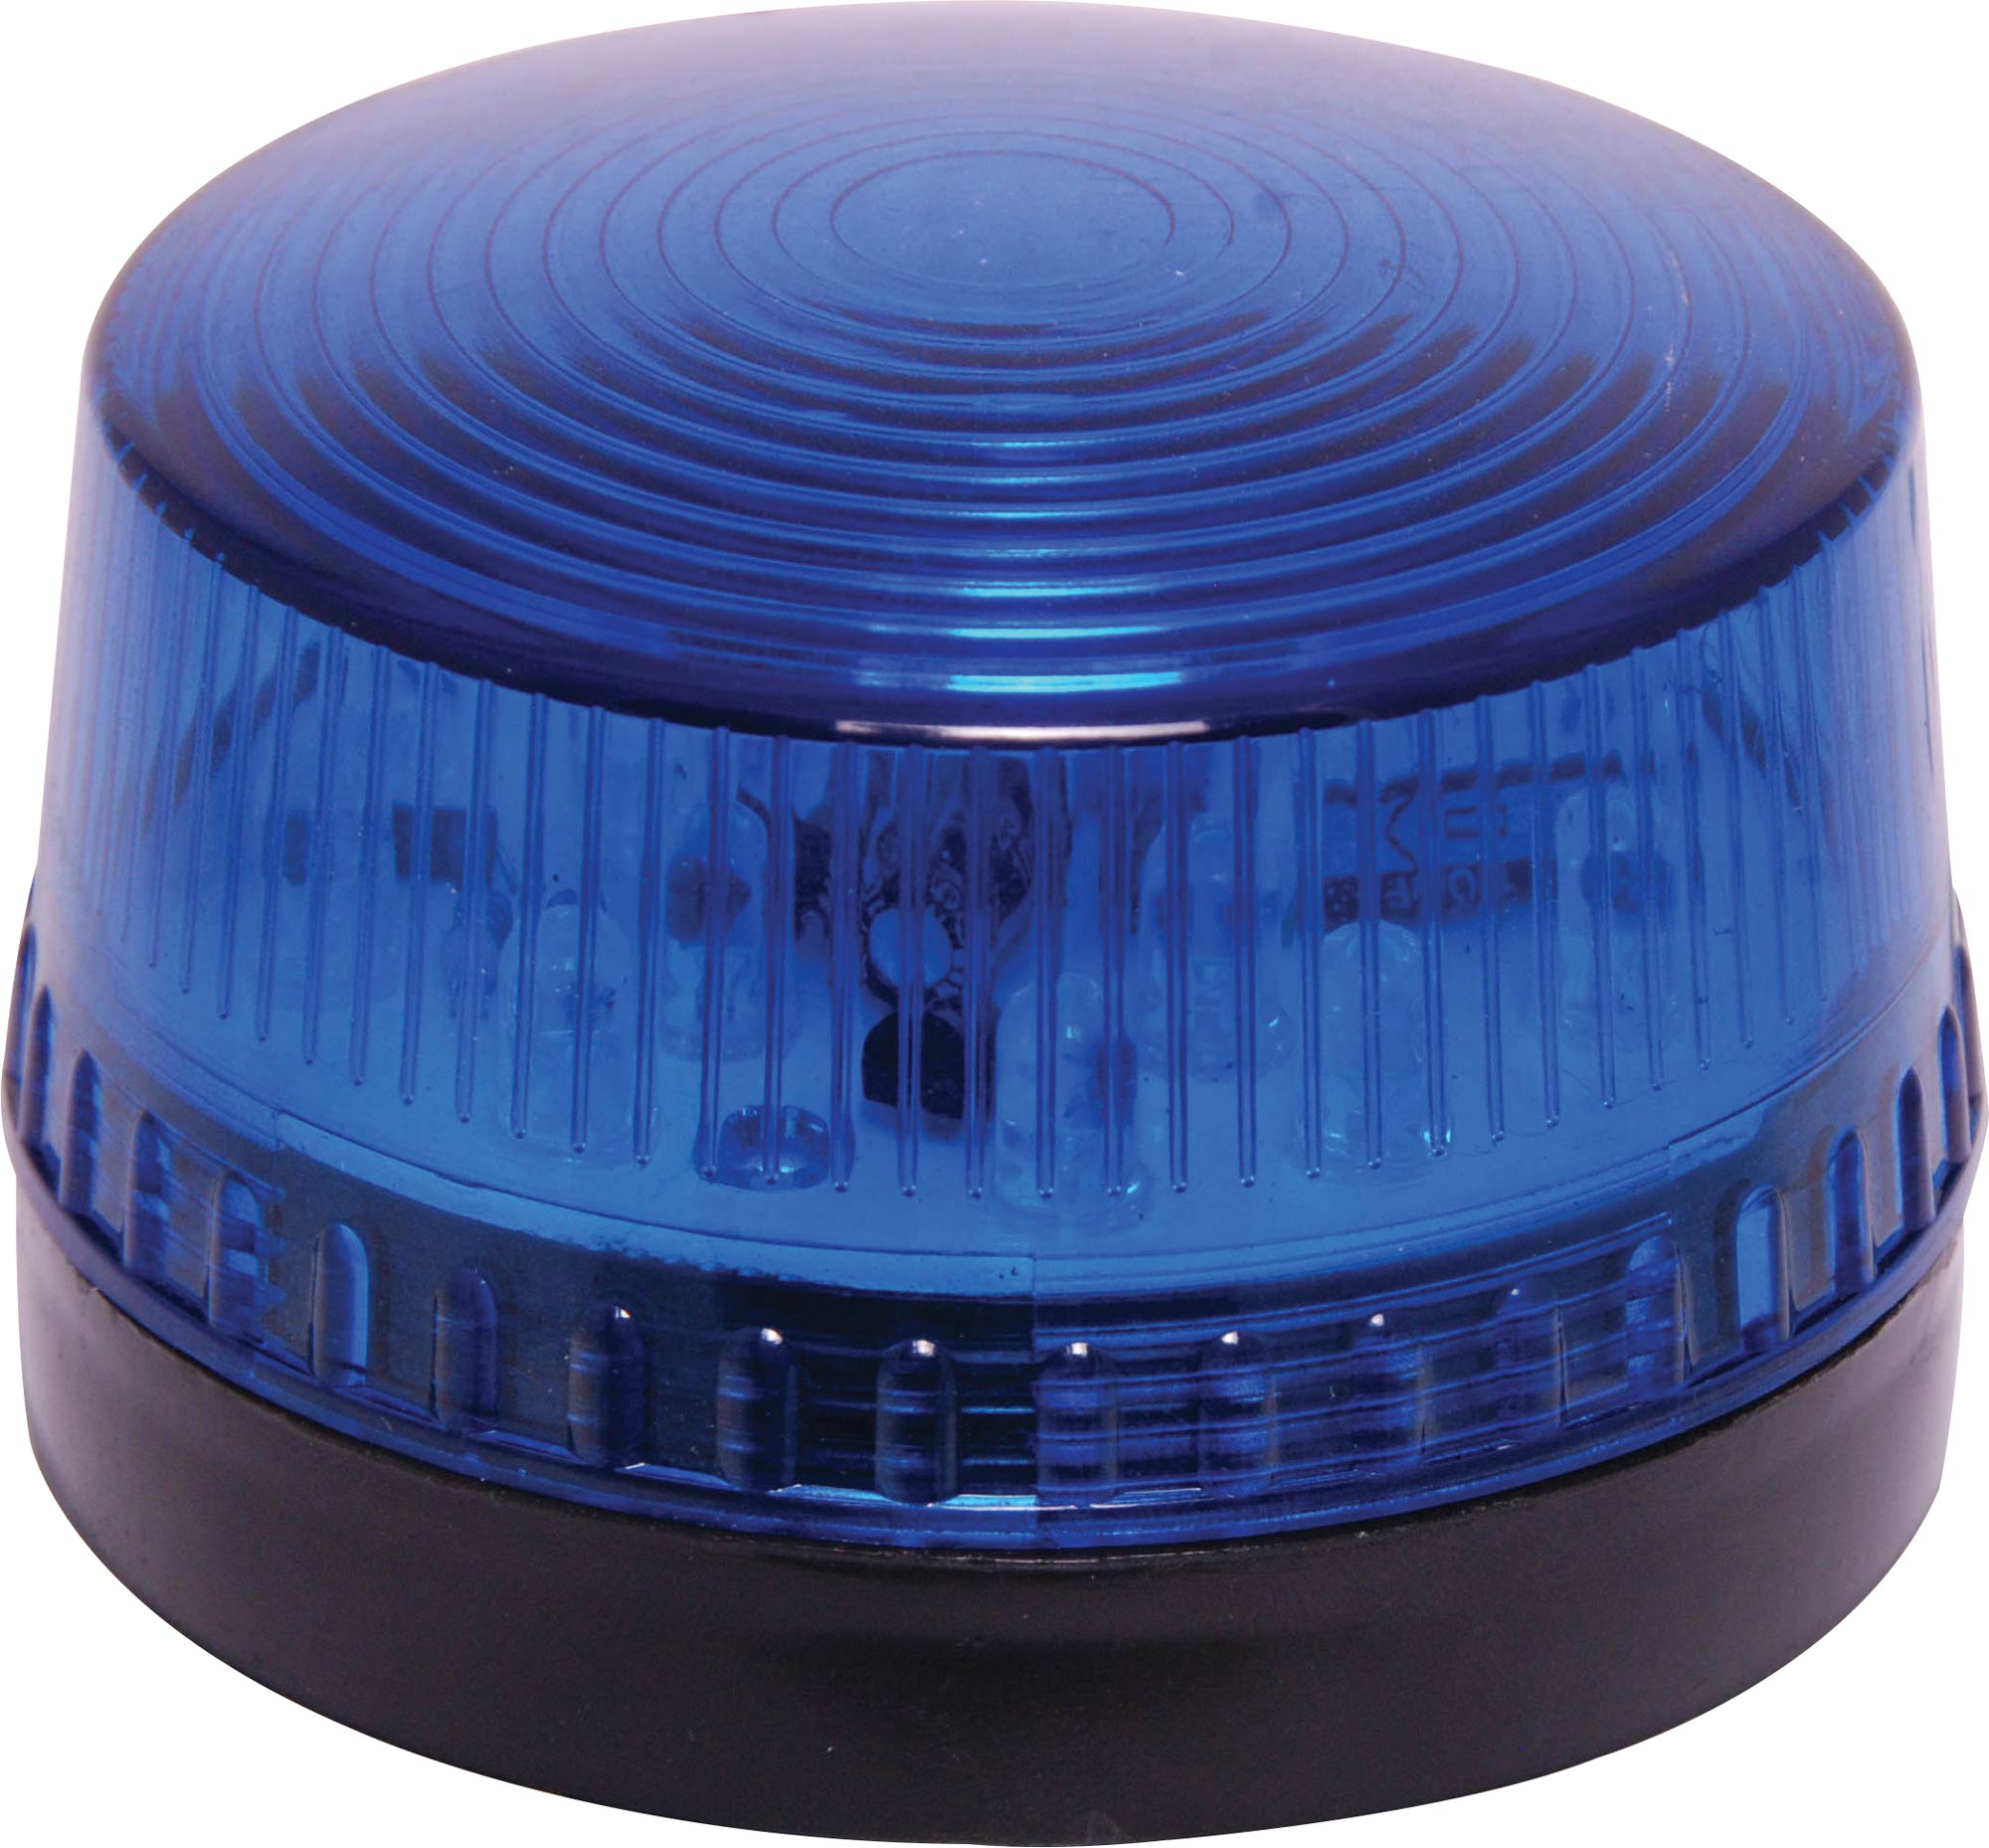 12V 1W FLASHING BLUE LED STROBE LIGHT PLASTIC 6-15VDC 71DIAx35H (MM) 45CM CABLE